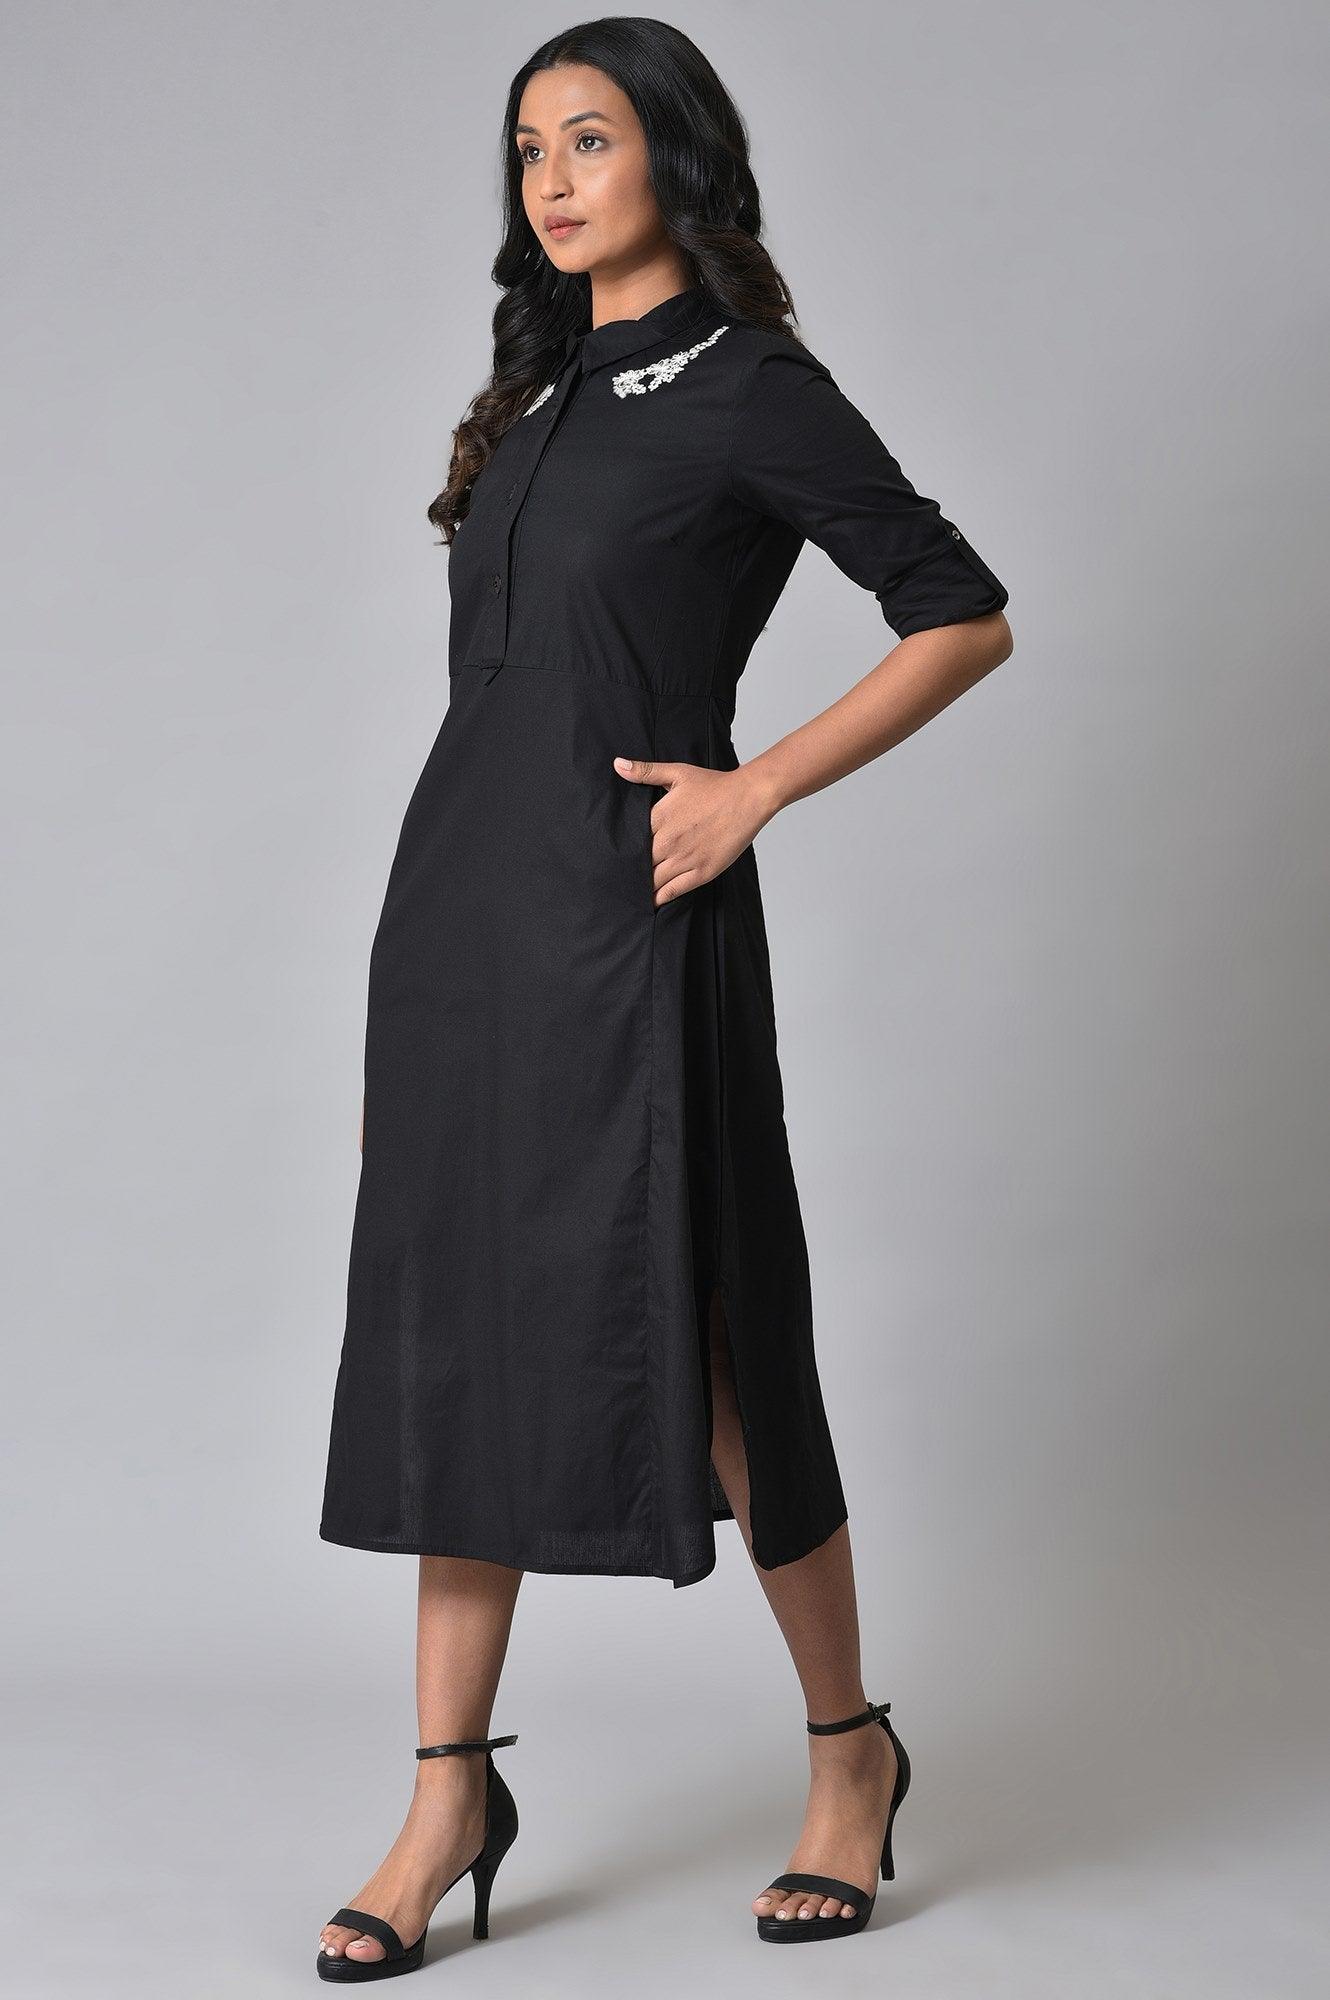 Black Cotton Embroidered Plus Size Shirt Dress - wforwoman